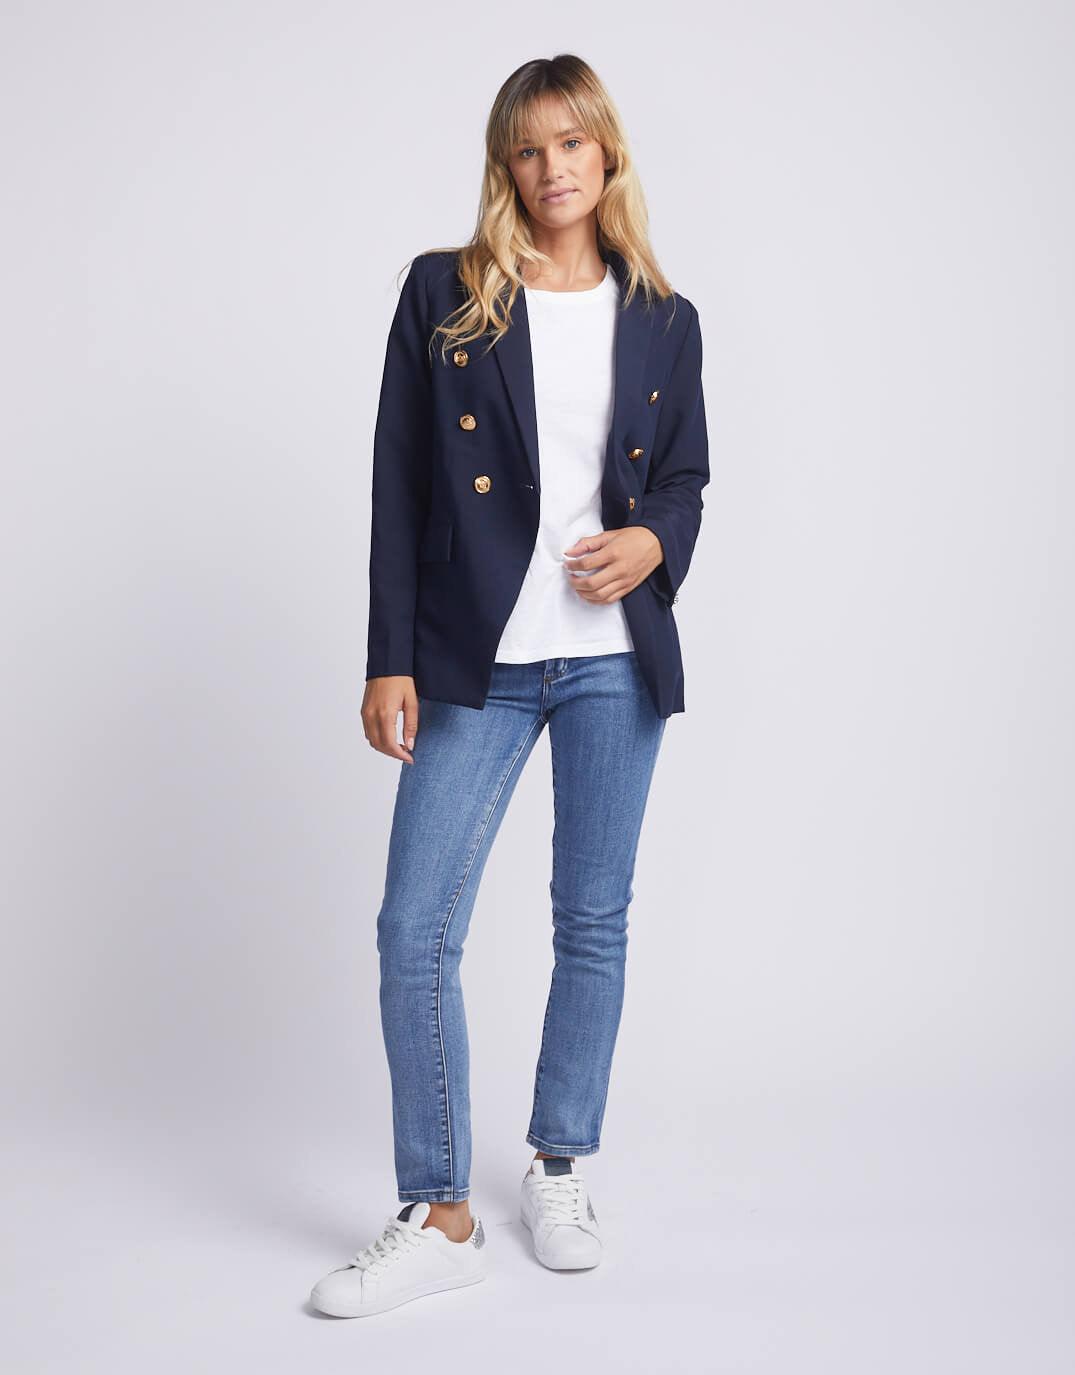 Gordon Smith - Lauren Blazer - Navy/Gold Buttons - White & Co Living Jackets